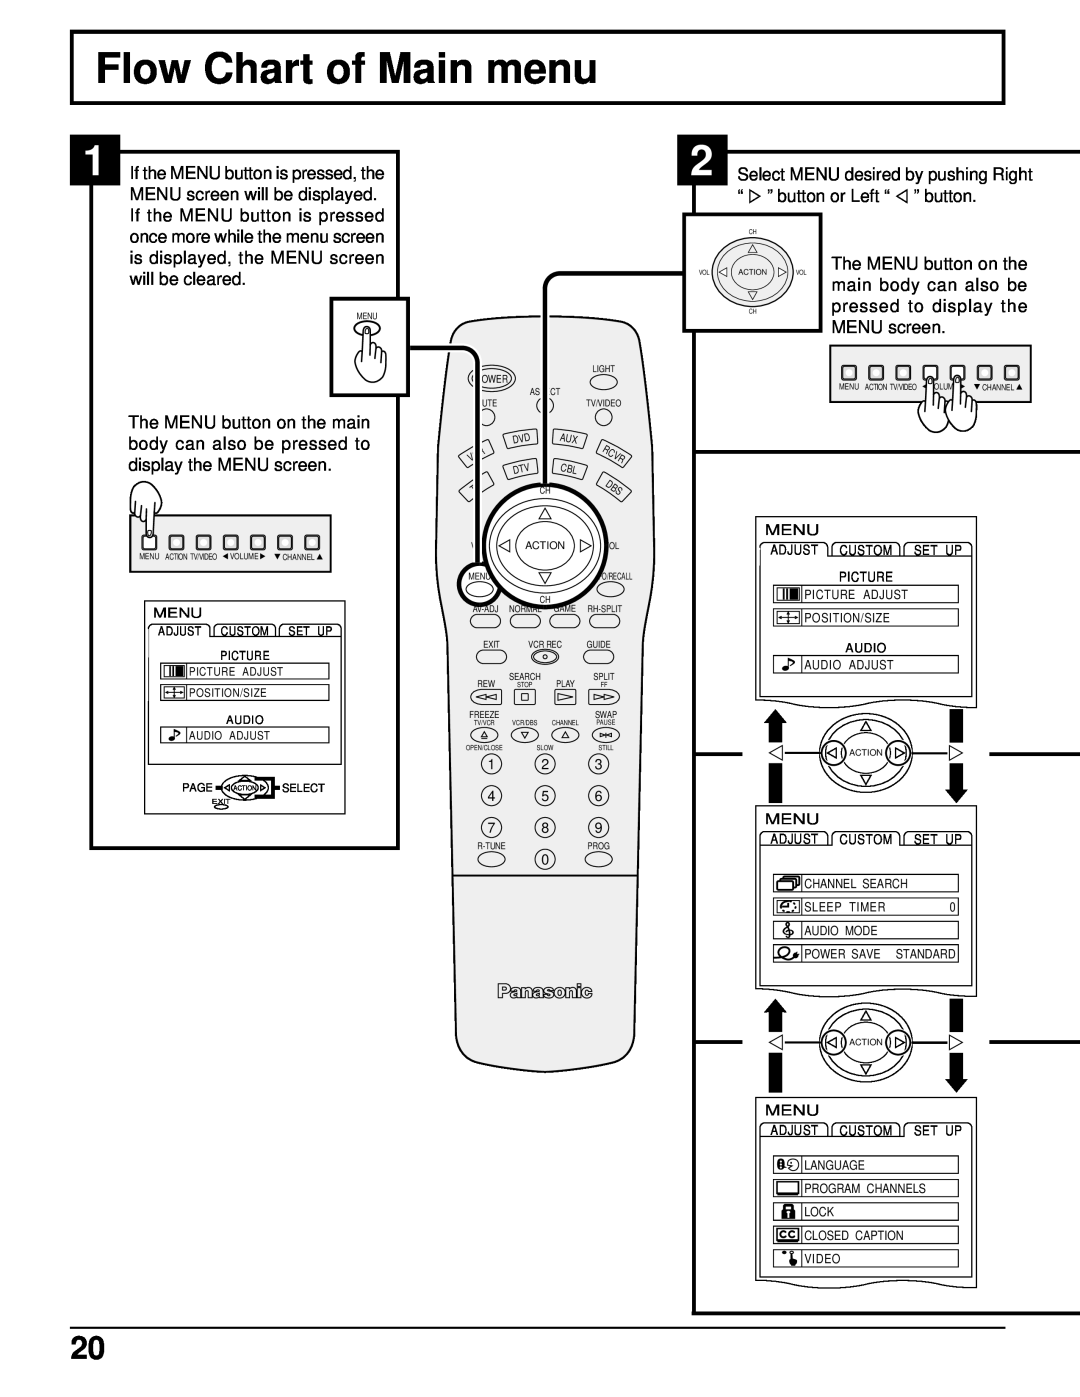 Panasonic CT 34WX50 manual Flow Chart of Main menu 